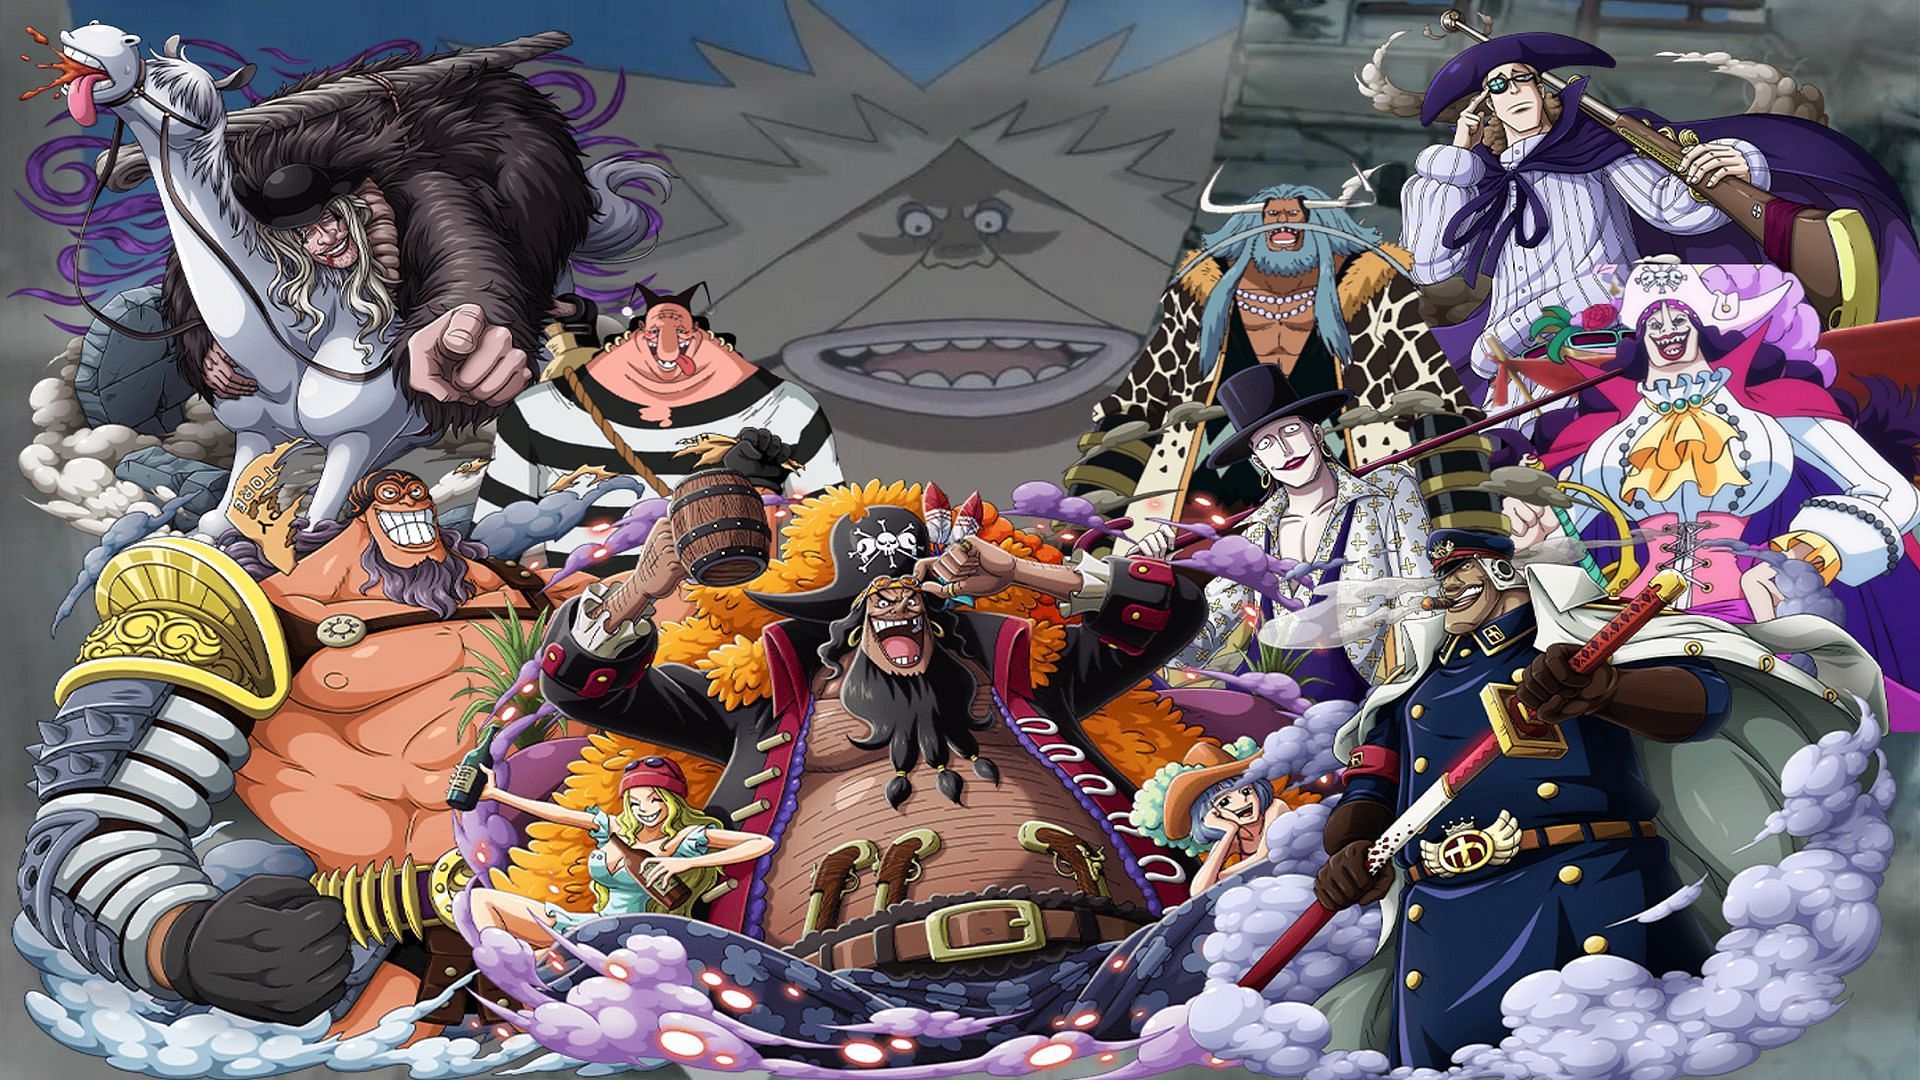 The Blackbeard Pirates will be the greatest threat in the future arcs of One Piece (Image via Eiichiro Oda/Shueisha, One Piece)